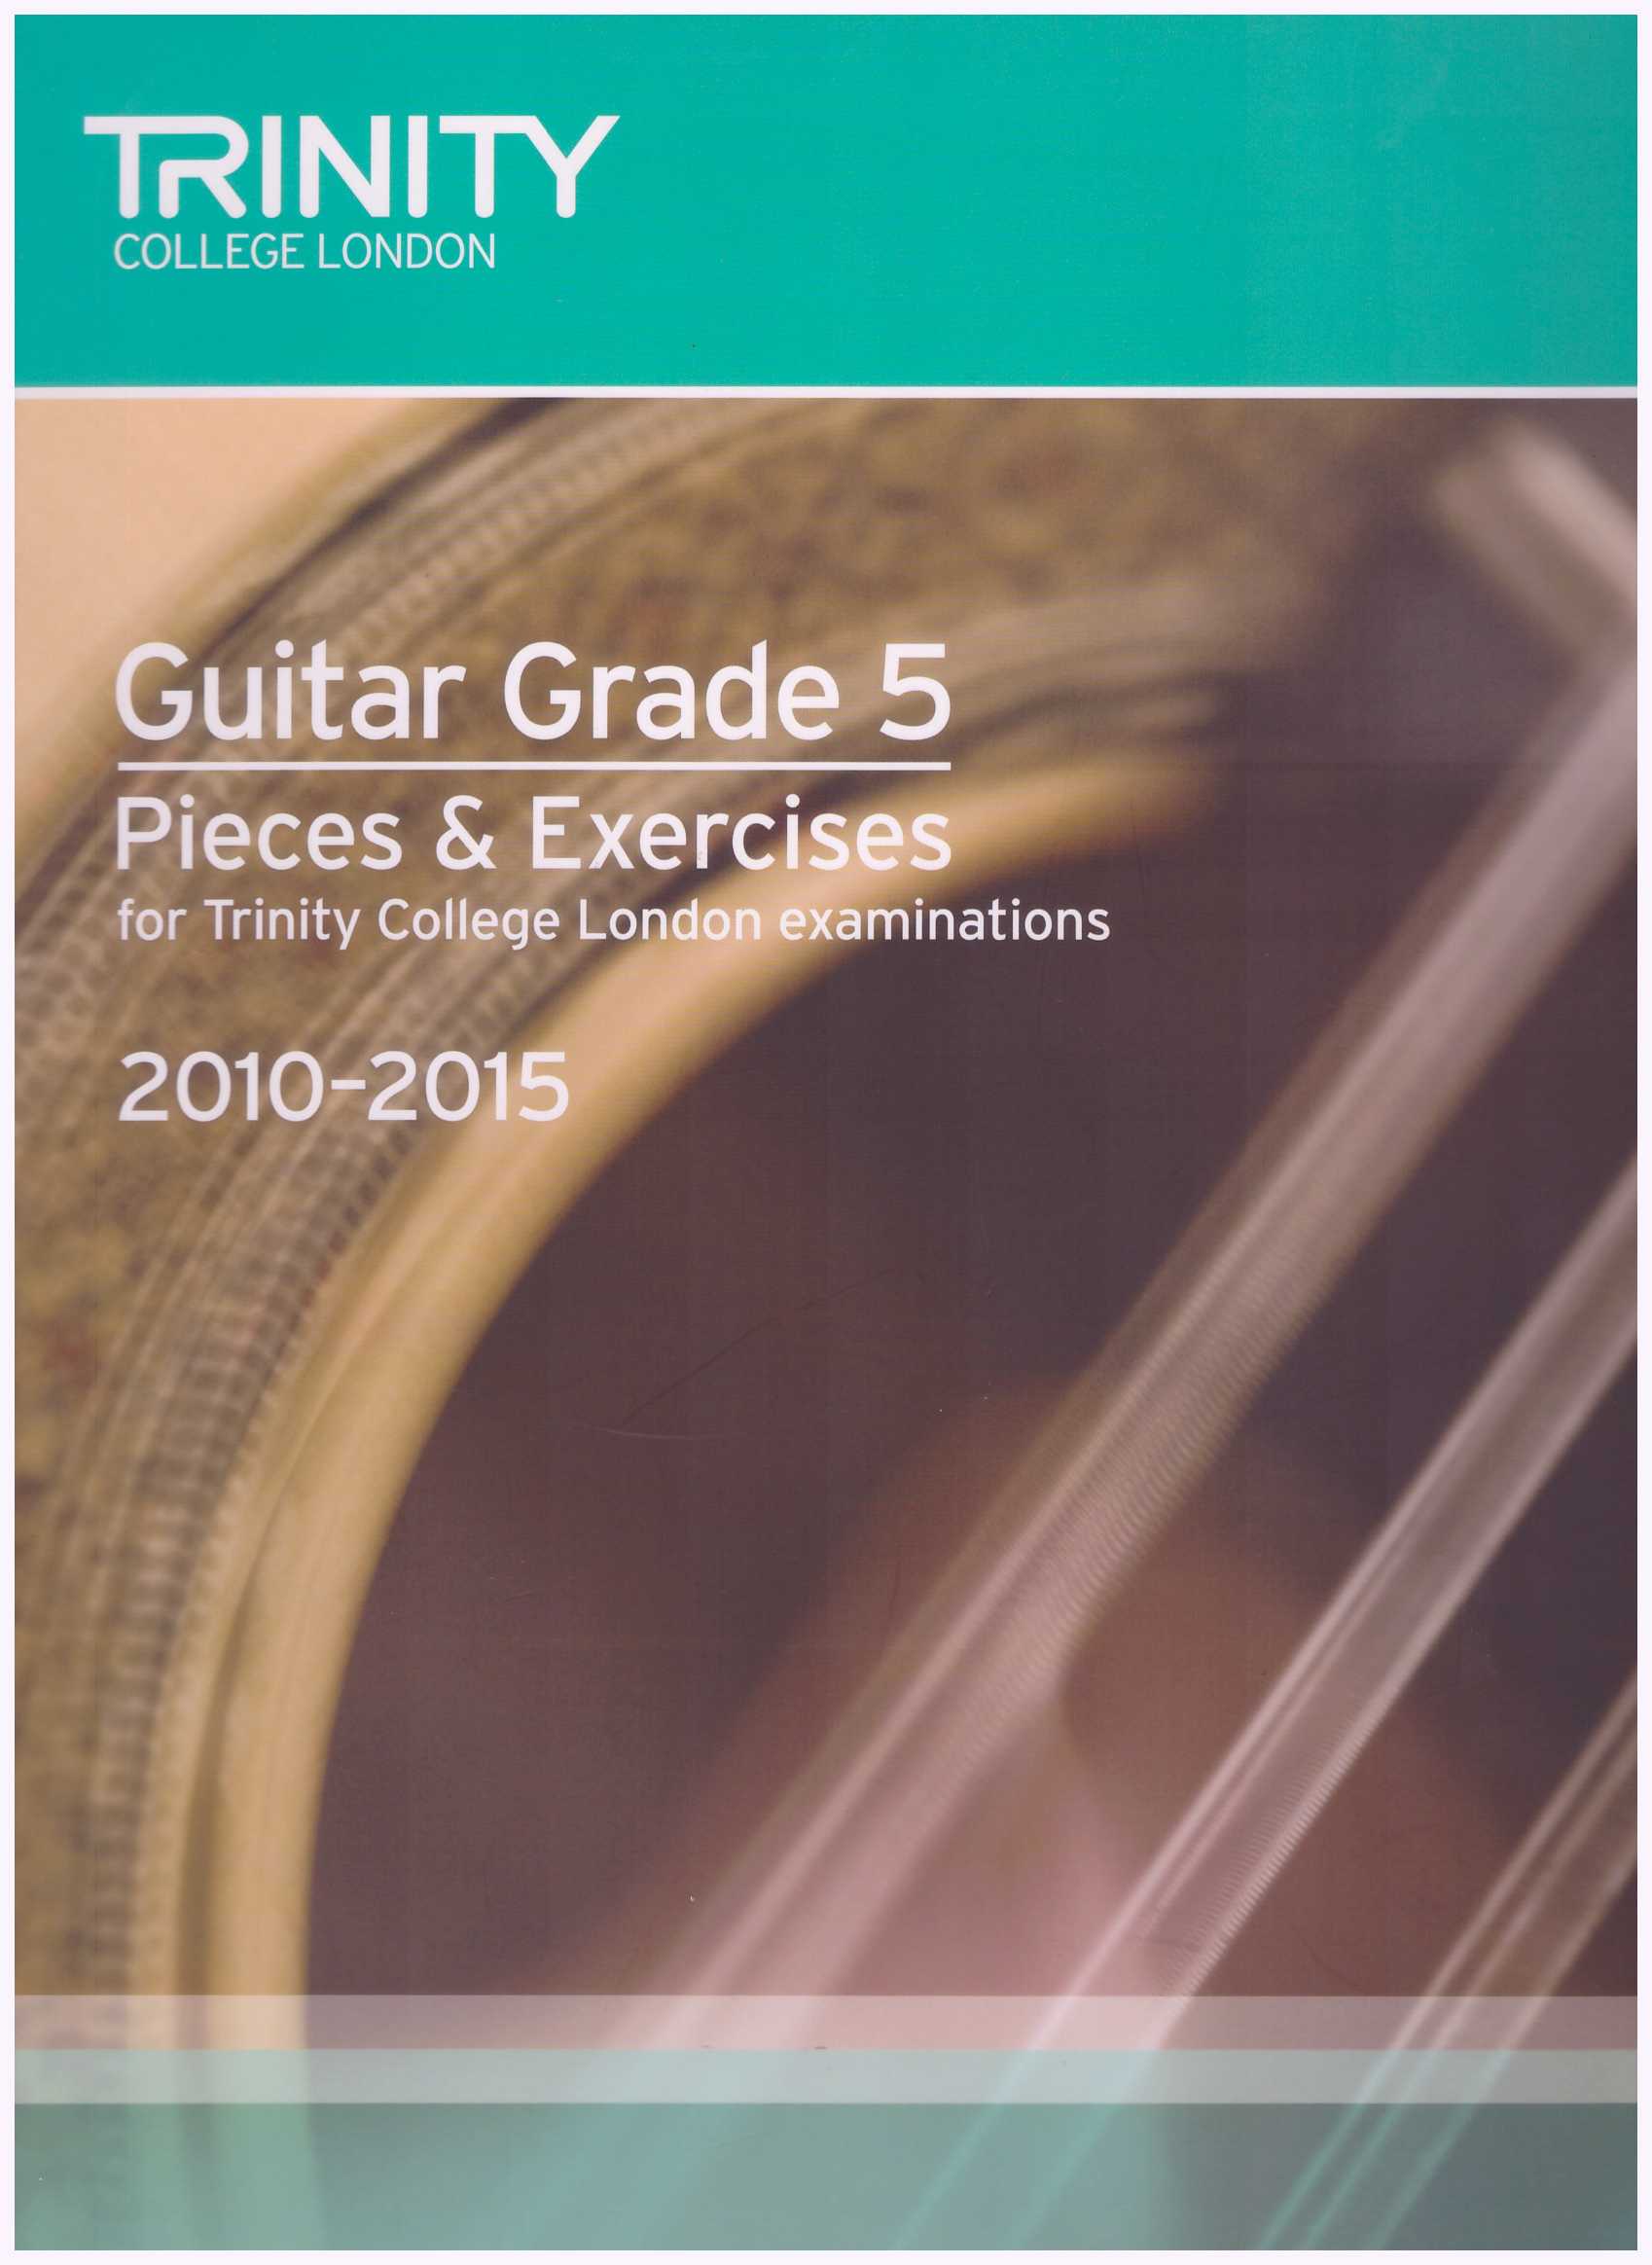 Trinity Classical Guitar Grade 5 Pieces & Exercises 2010-2015 /  Gitar Book / Exam Book / Education Book